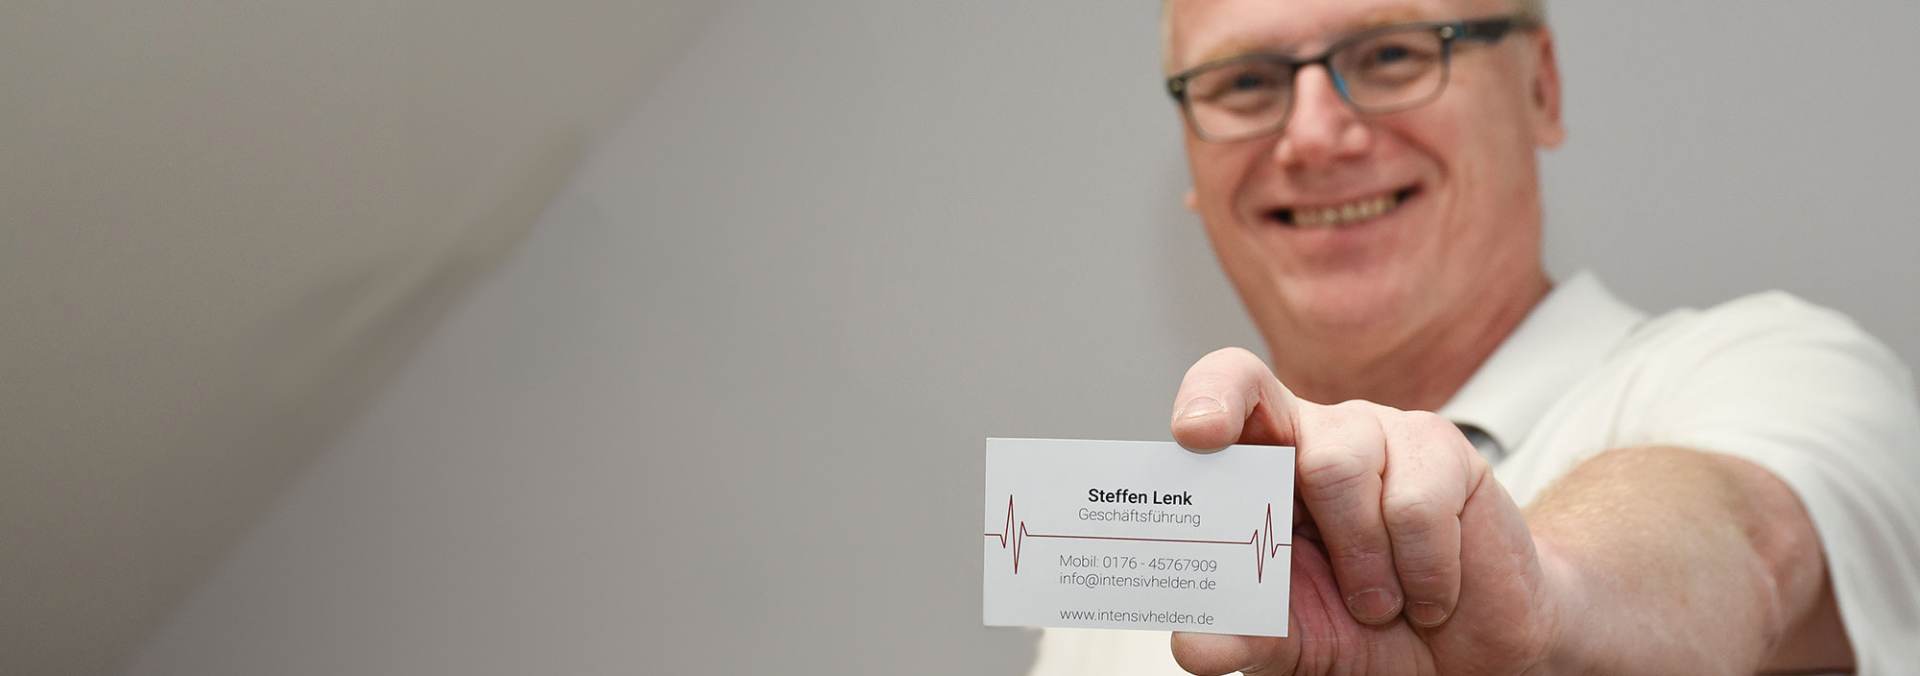 Herr Lenk hält lächelnd seine Visitenkarte ins Bild